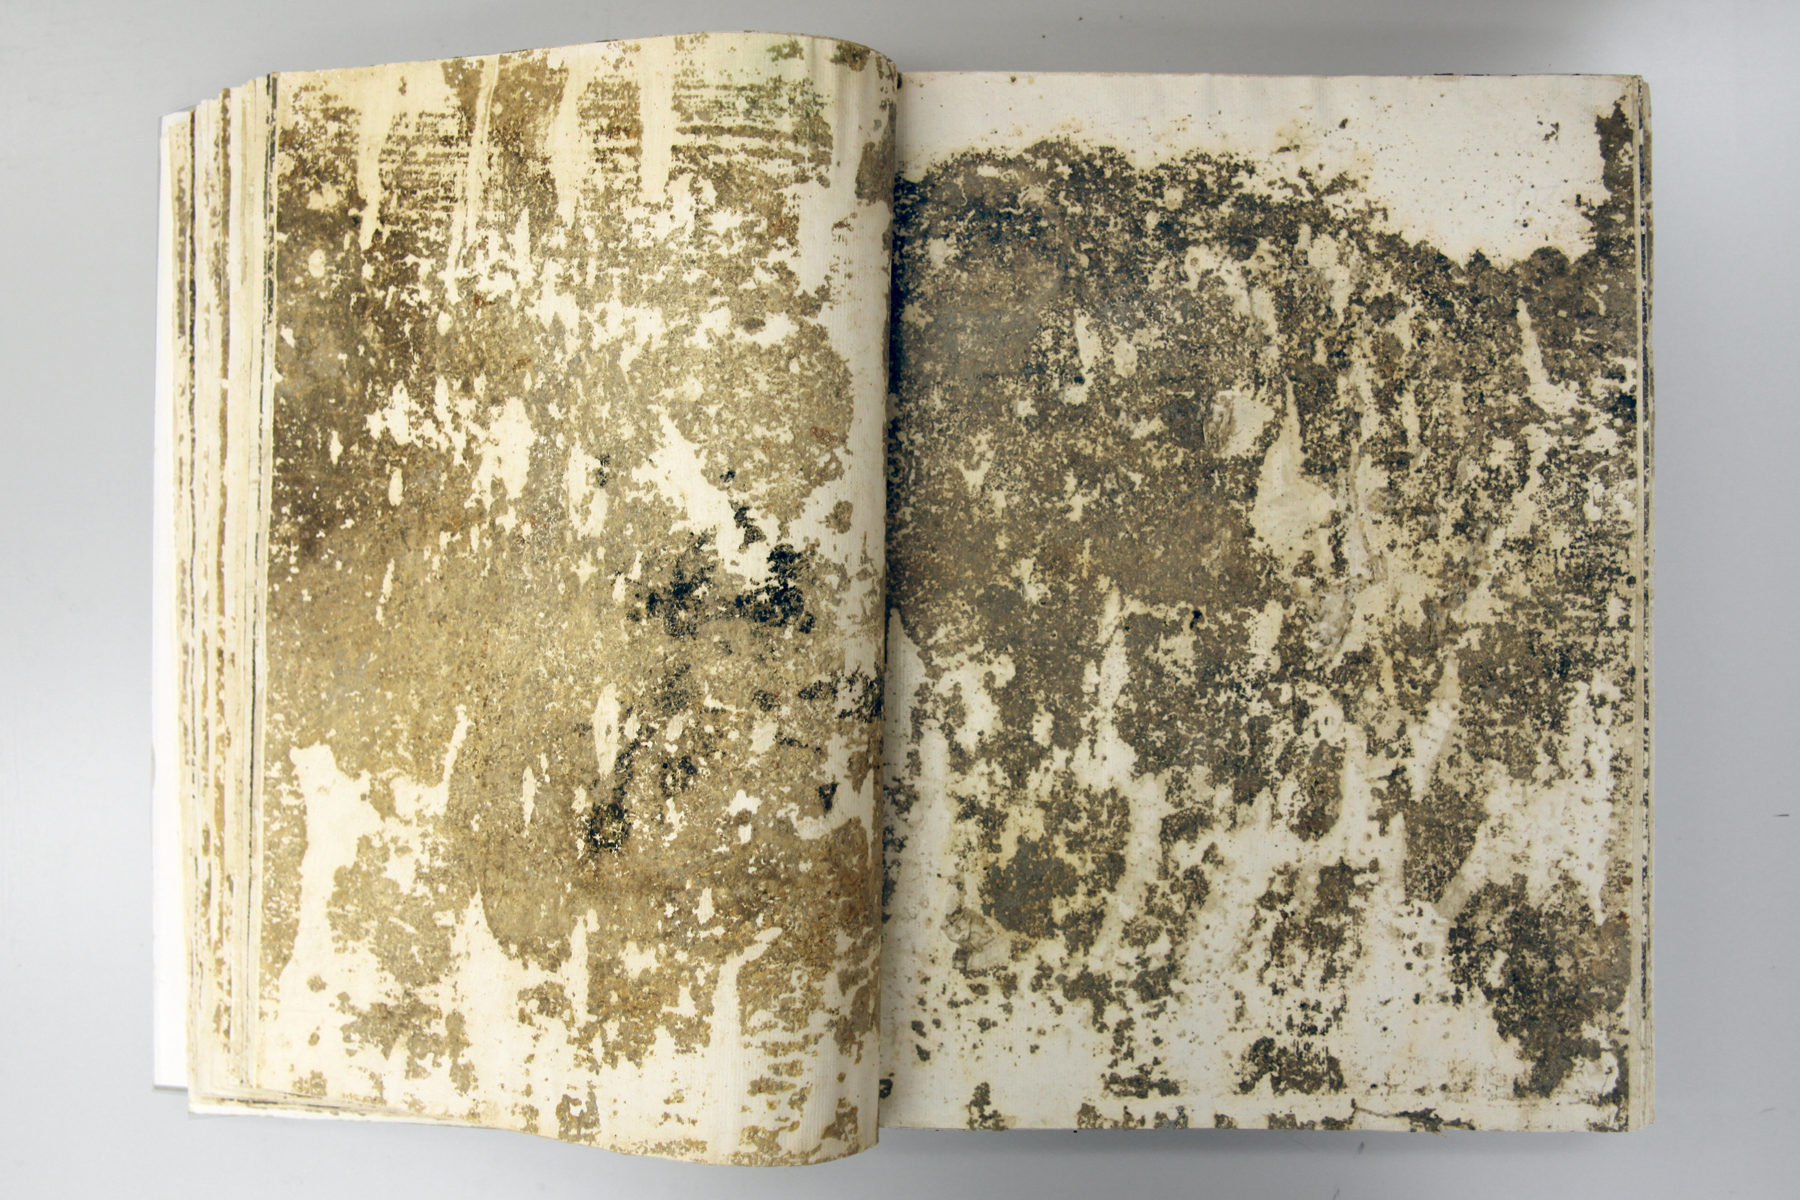 A. Scodro, Caduceo, 2009-2015, paper, wax, floor imprint, paperback, variable dimensions, four pieces